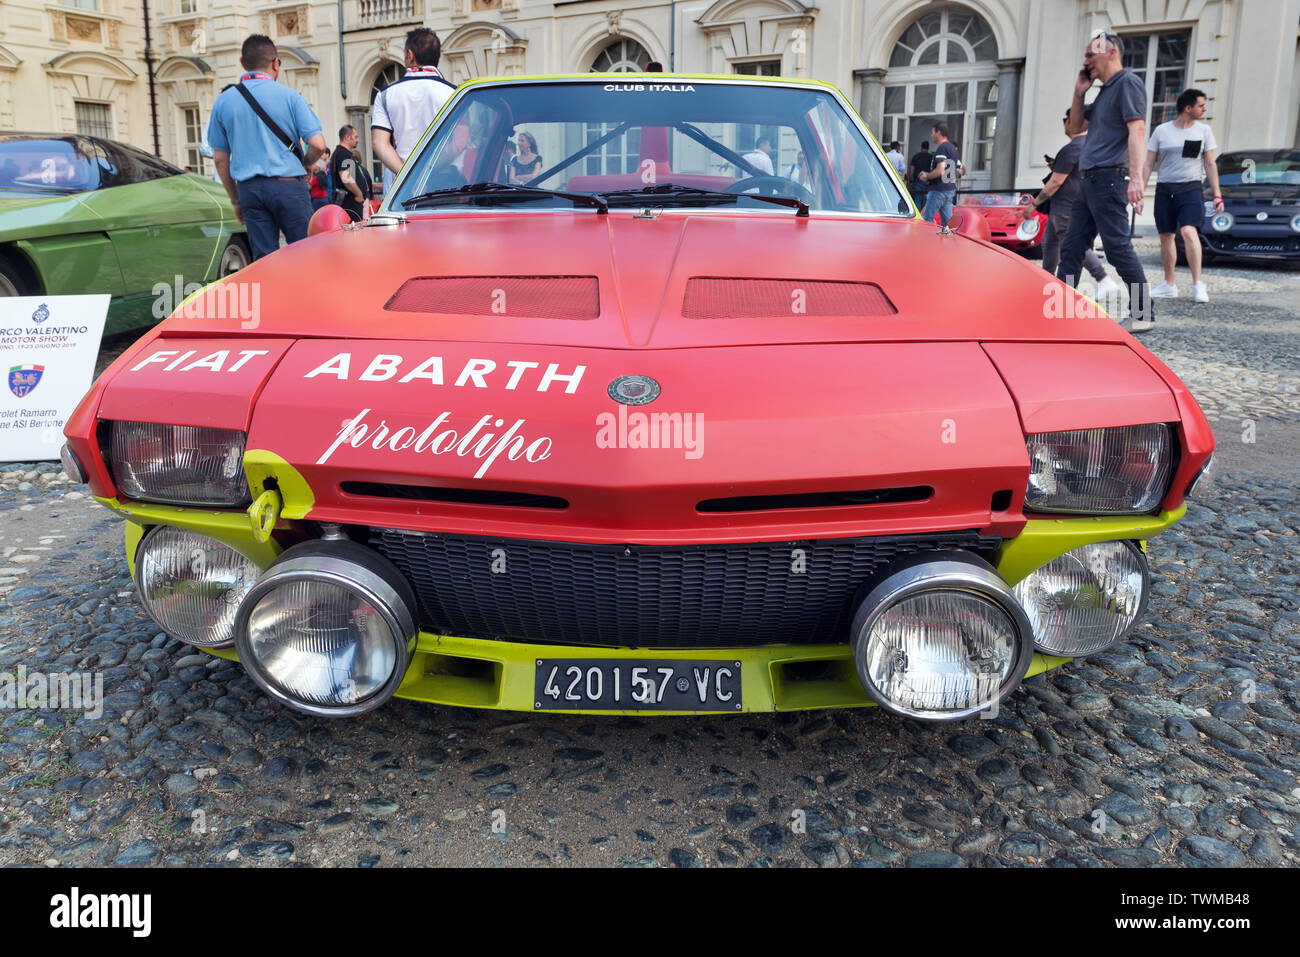 Fiat Abarth X1/9 prototype. Torino,Valentino castle, motor show 2019 Stock Photo